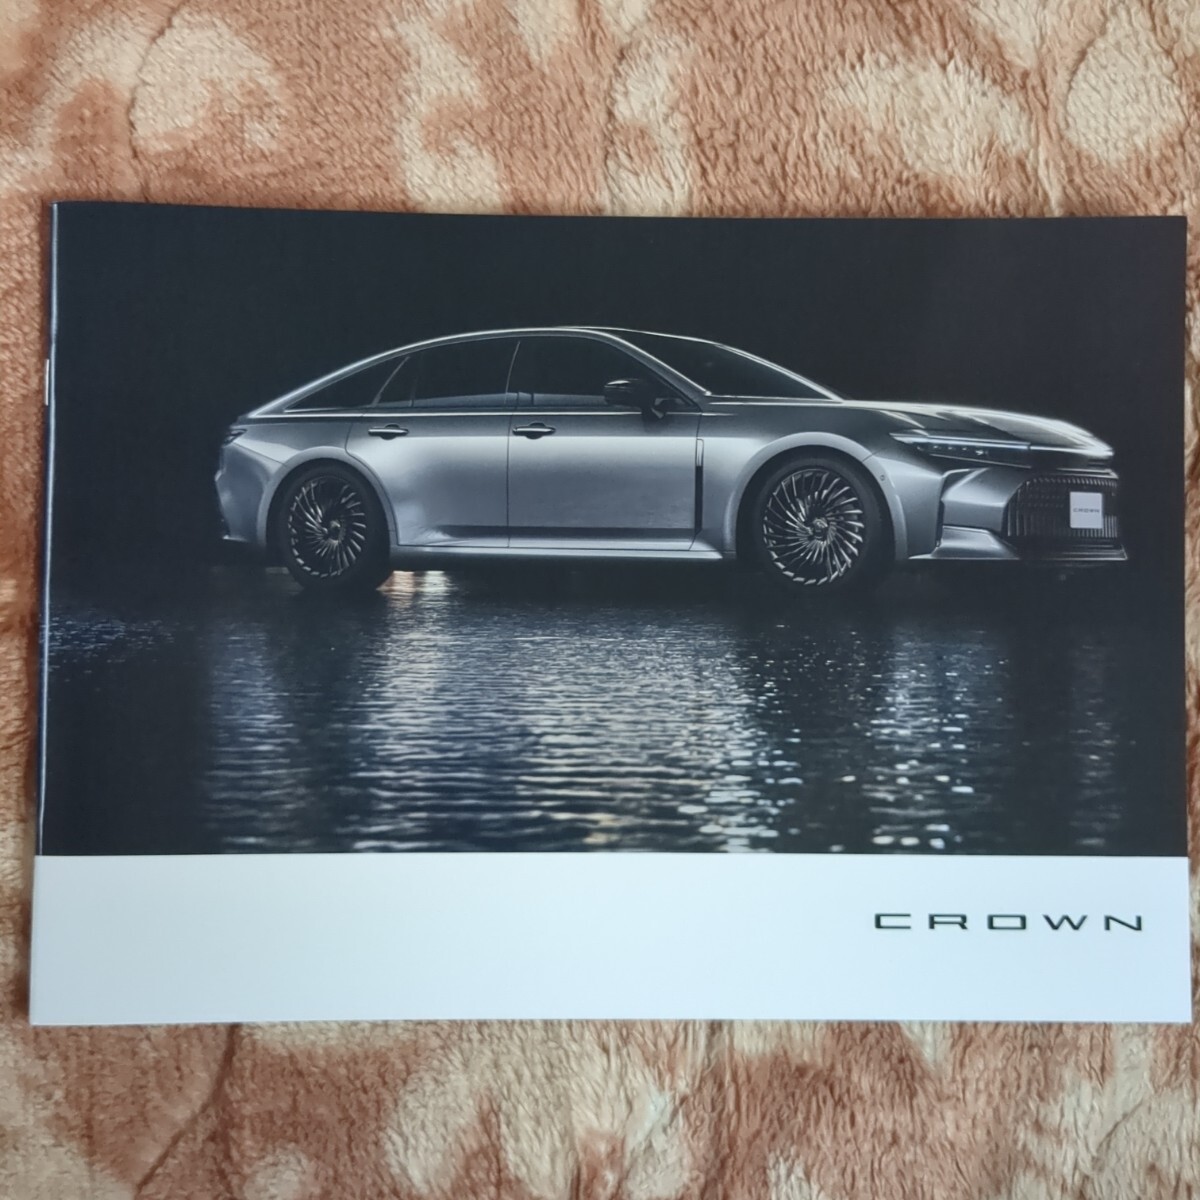  Toyota новая модель Crown седан каталог 